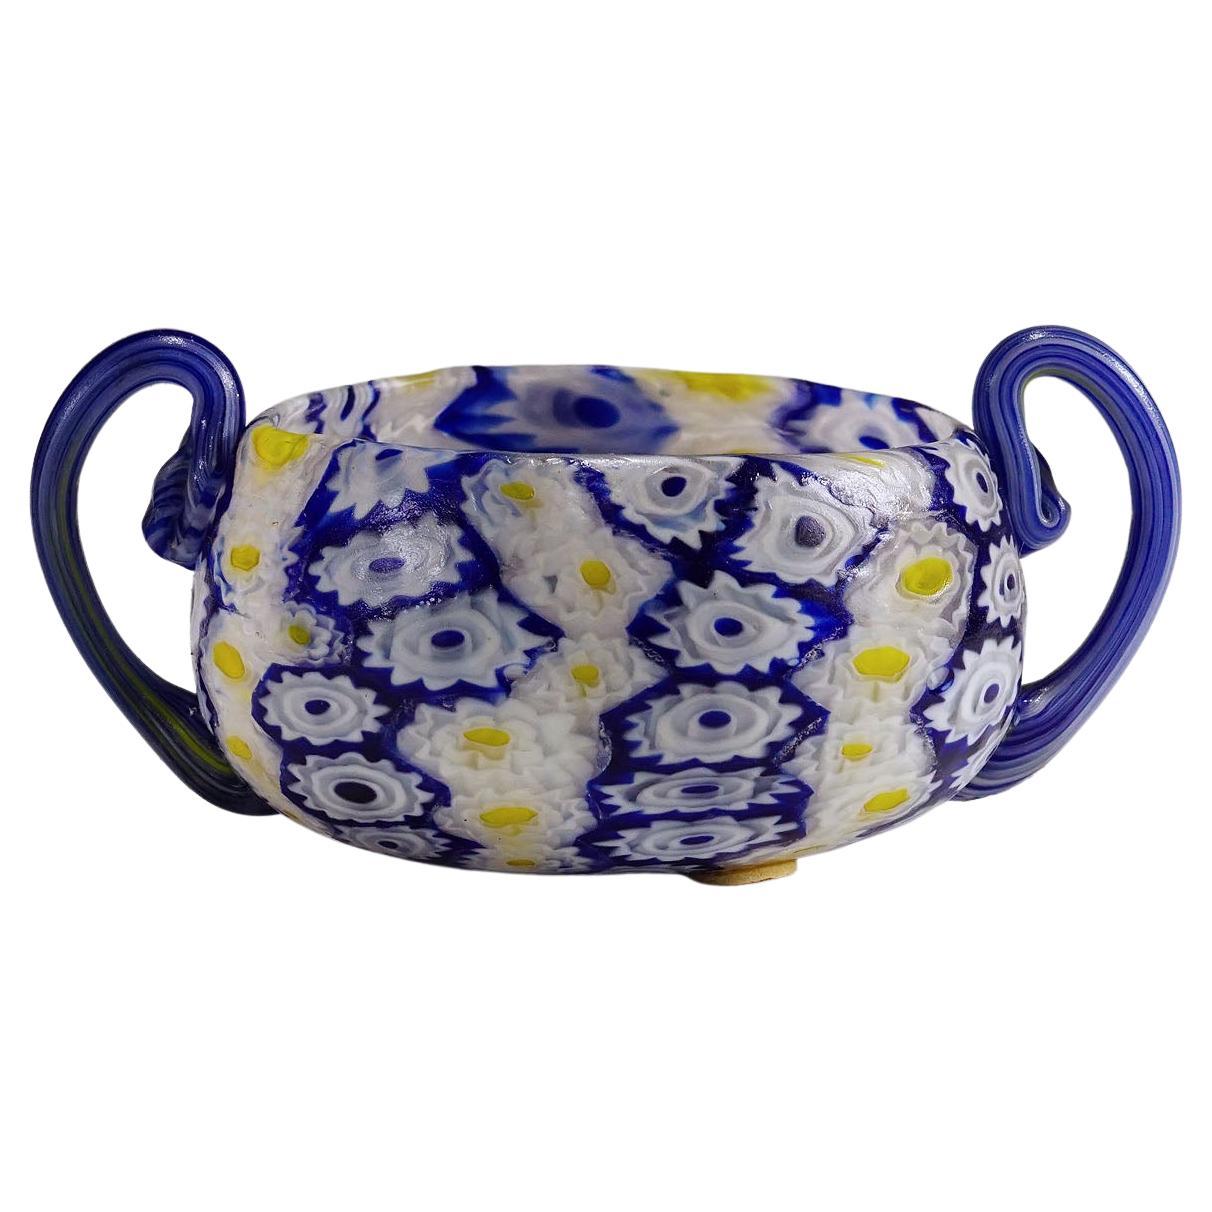 Antique Millefiori Bowl in Blue, Yellow and White, Fratelli Toso Murano 1910 For Sale